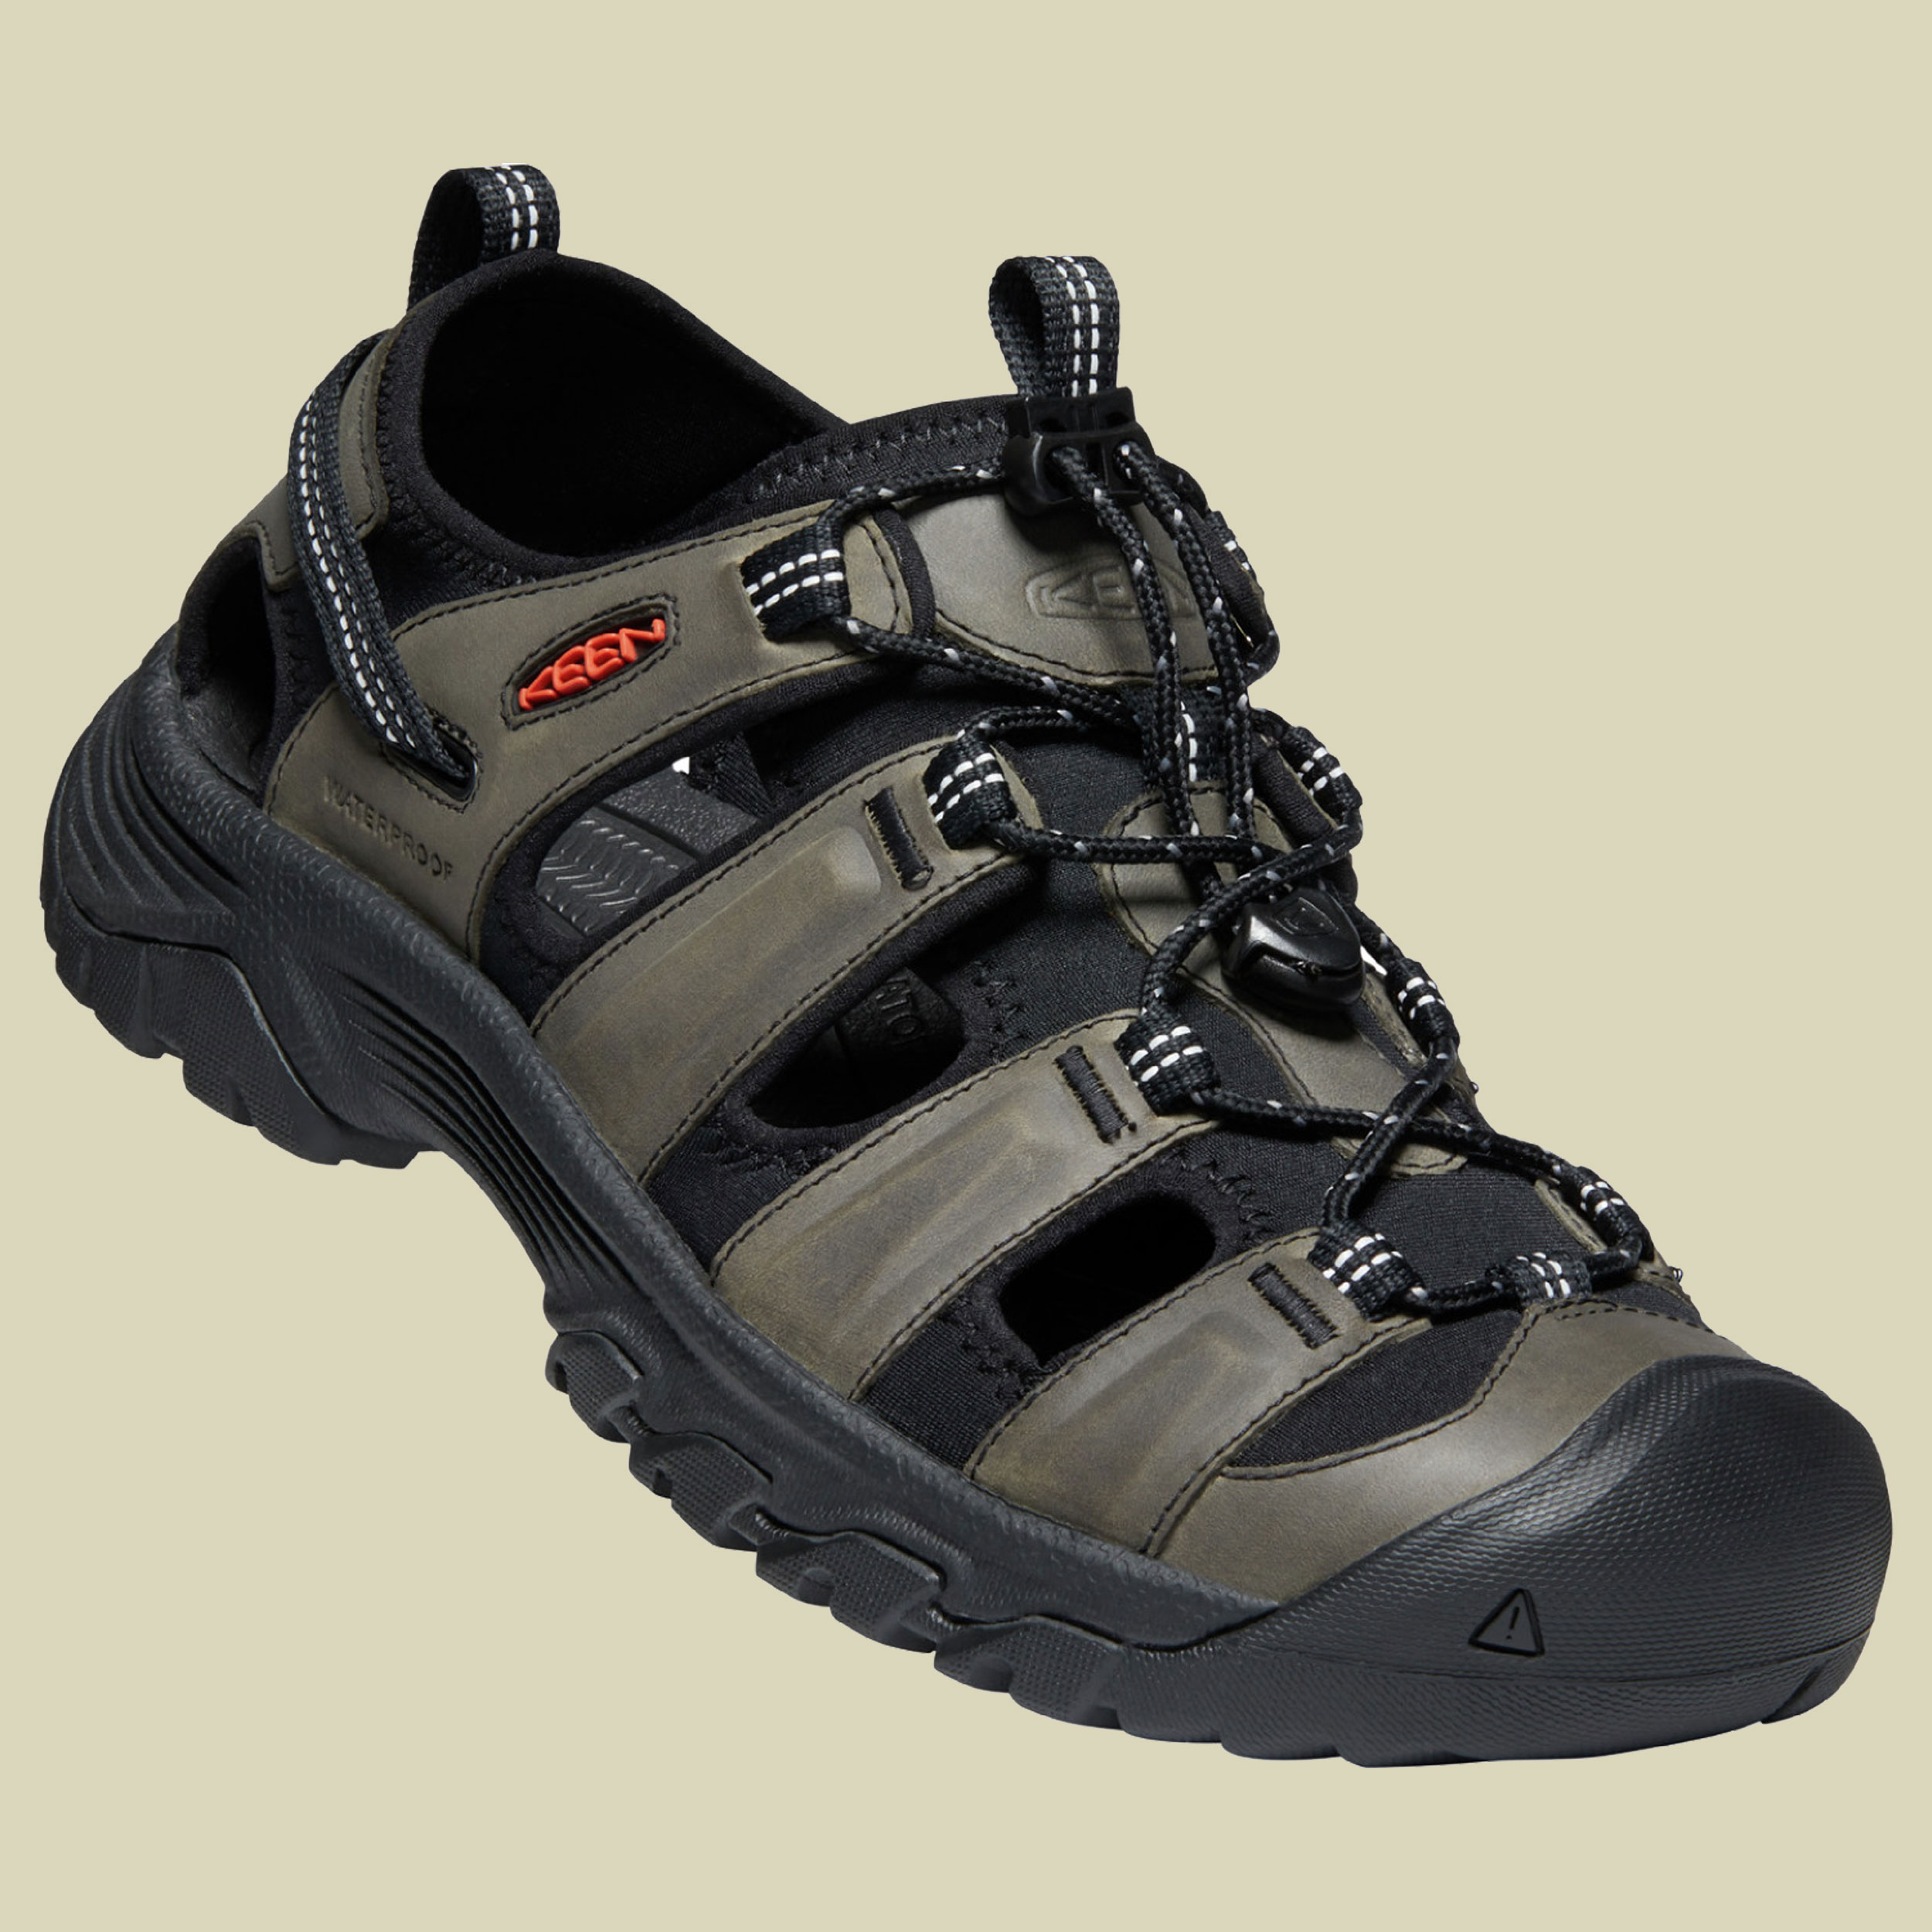 Targhee III Sandal Men Größe UK 9 Farbe grey/black